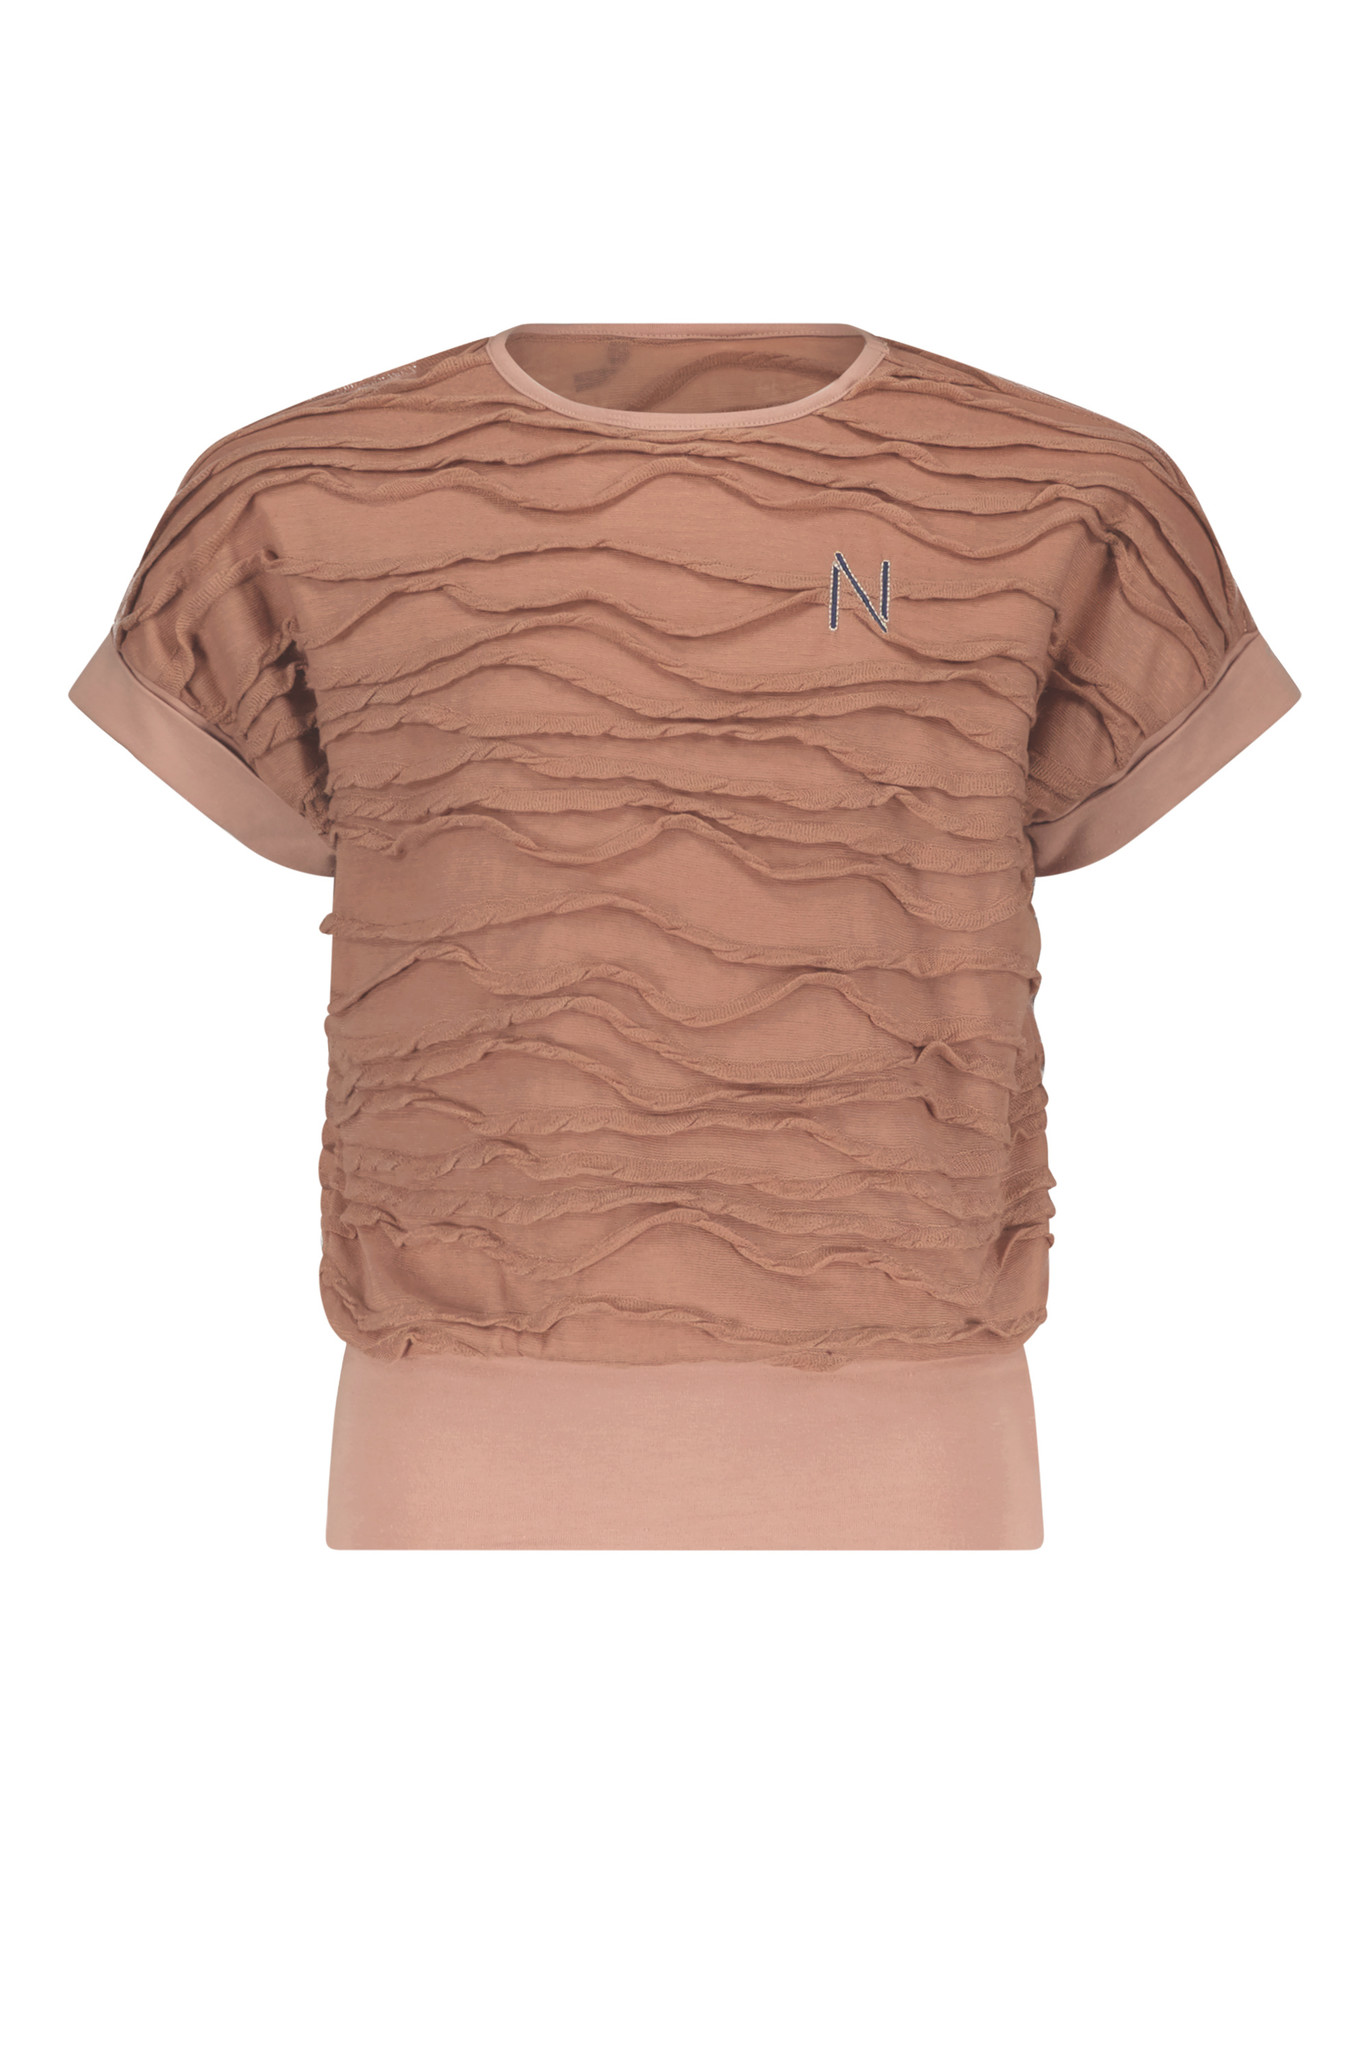 NoBell meiden t-shirt loose fit Kez Sand Blush